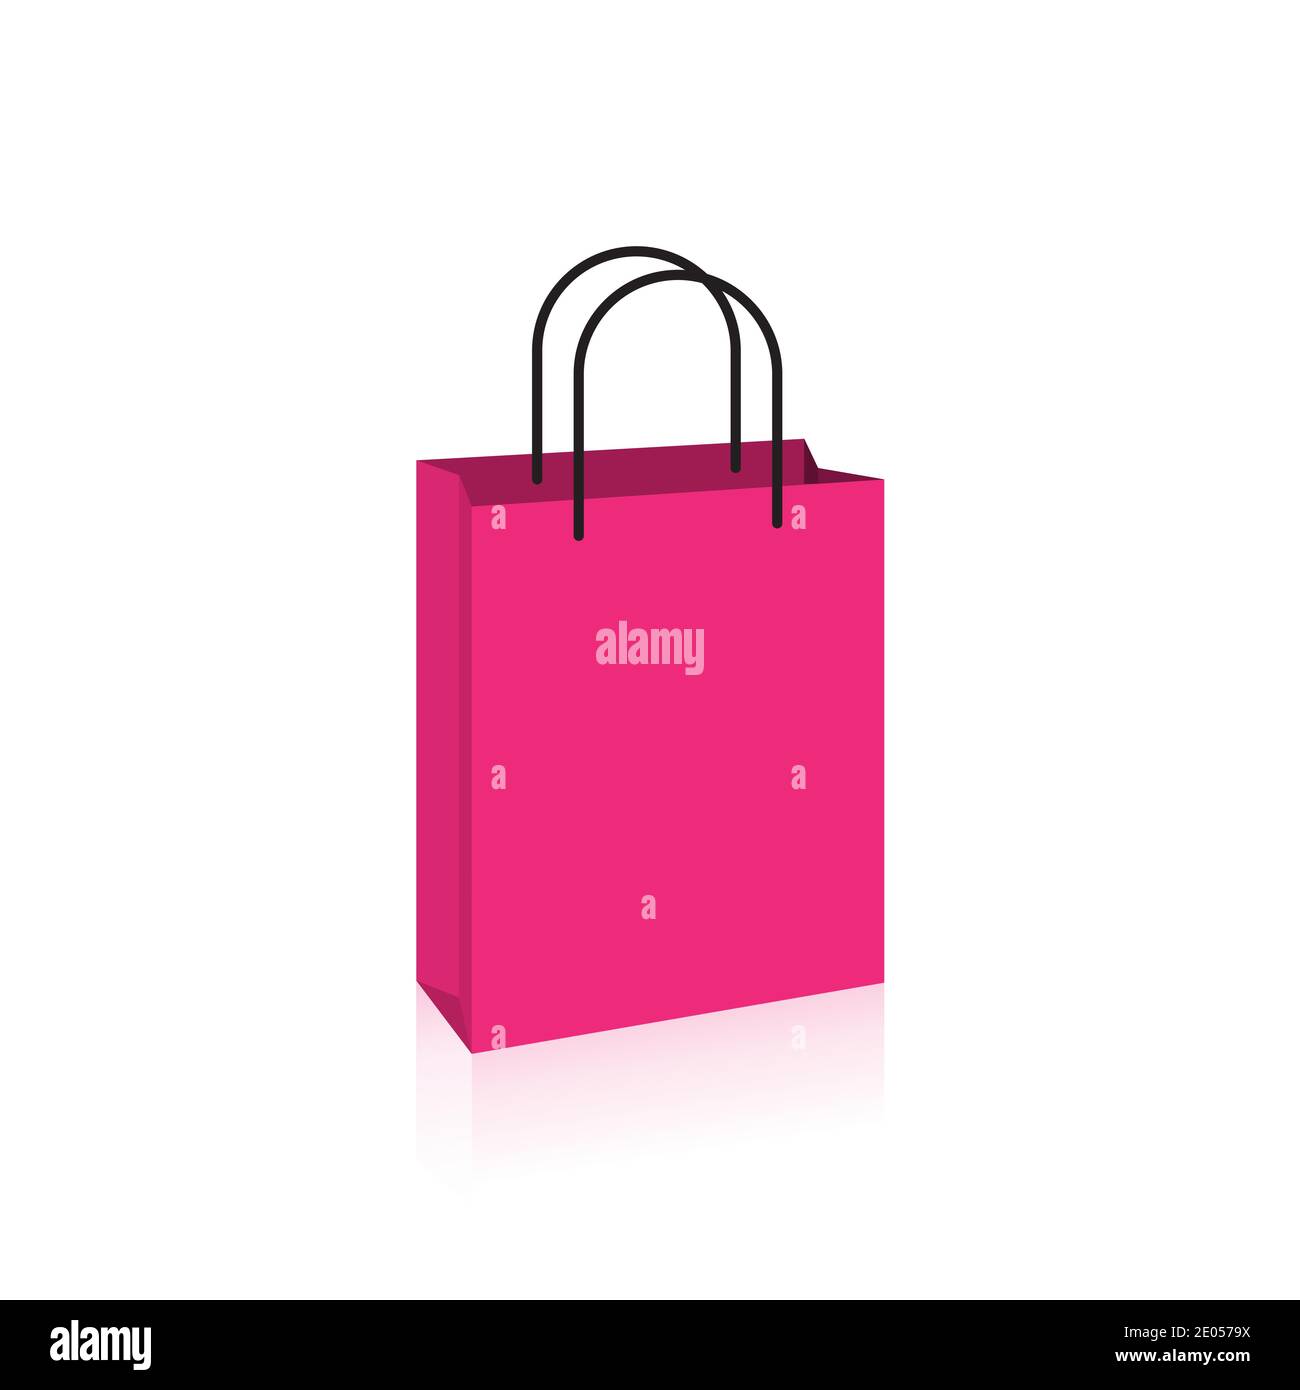 Hot Pink Gloss Gift Bags, Cub 8x4x10, 10 Pack